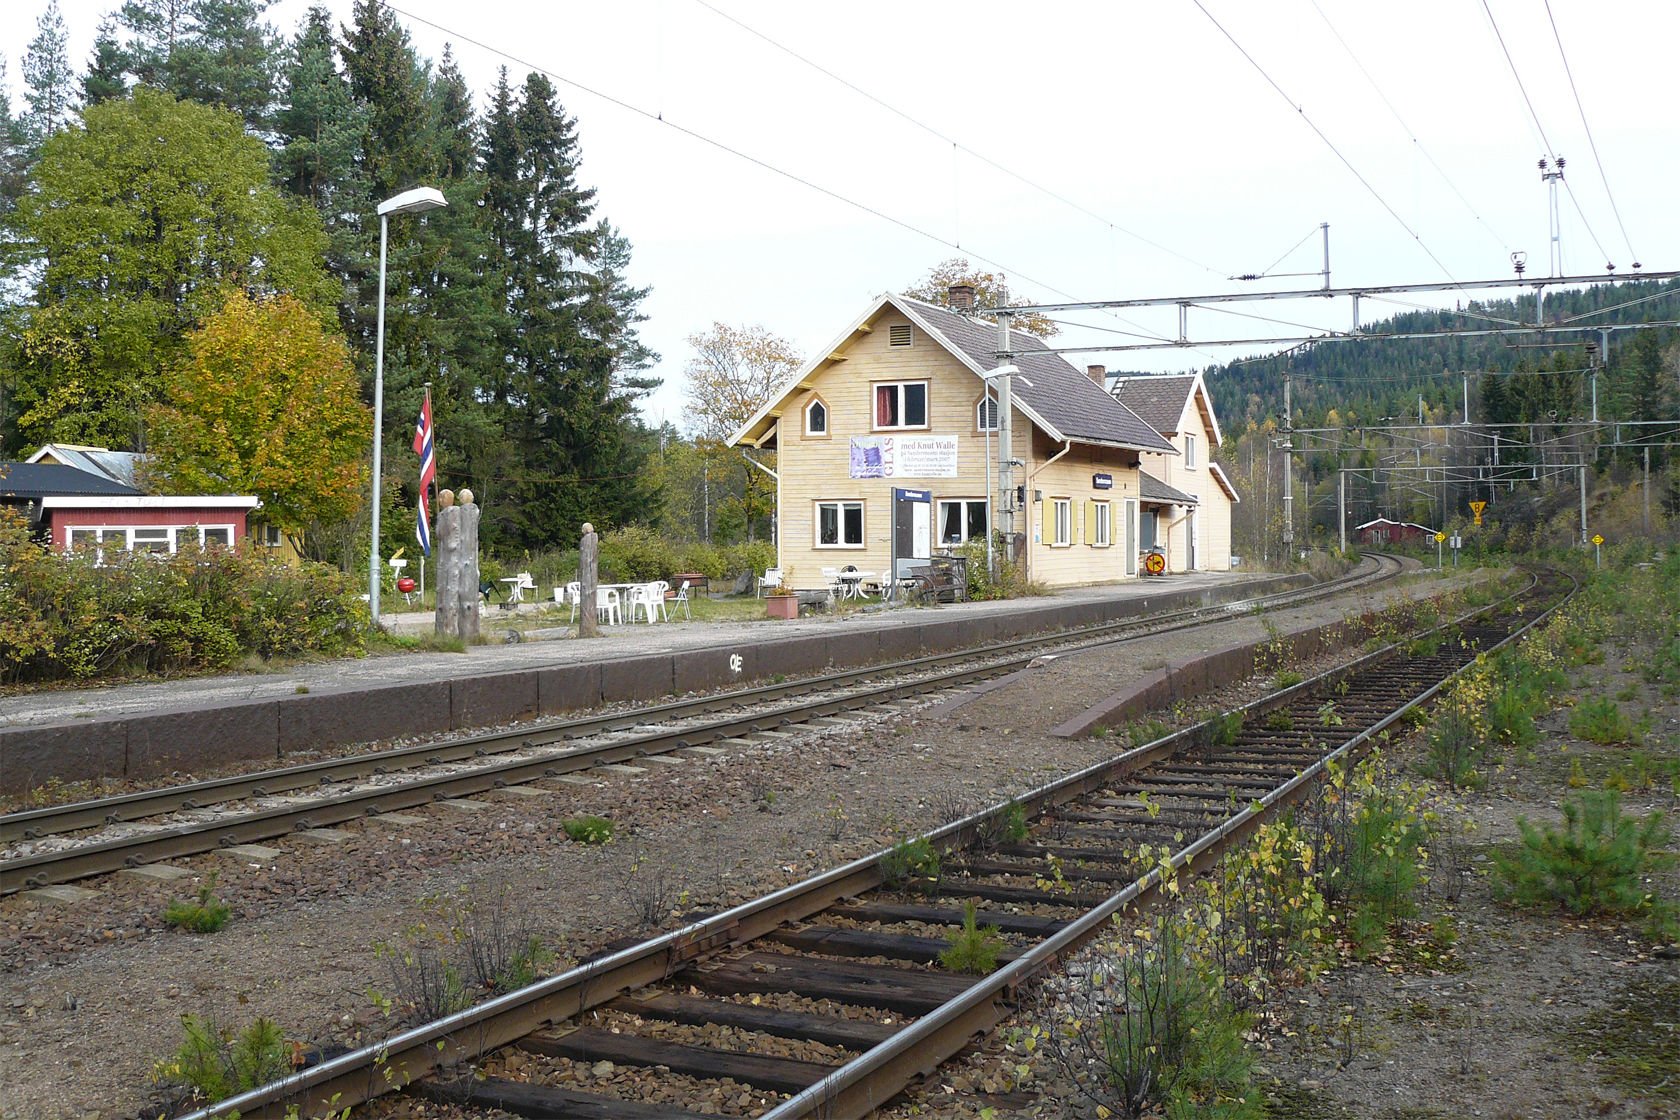 Tracks and station building at Sandermosen station